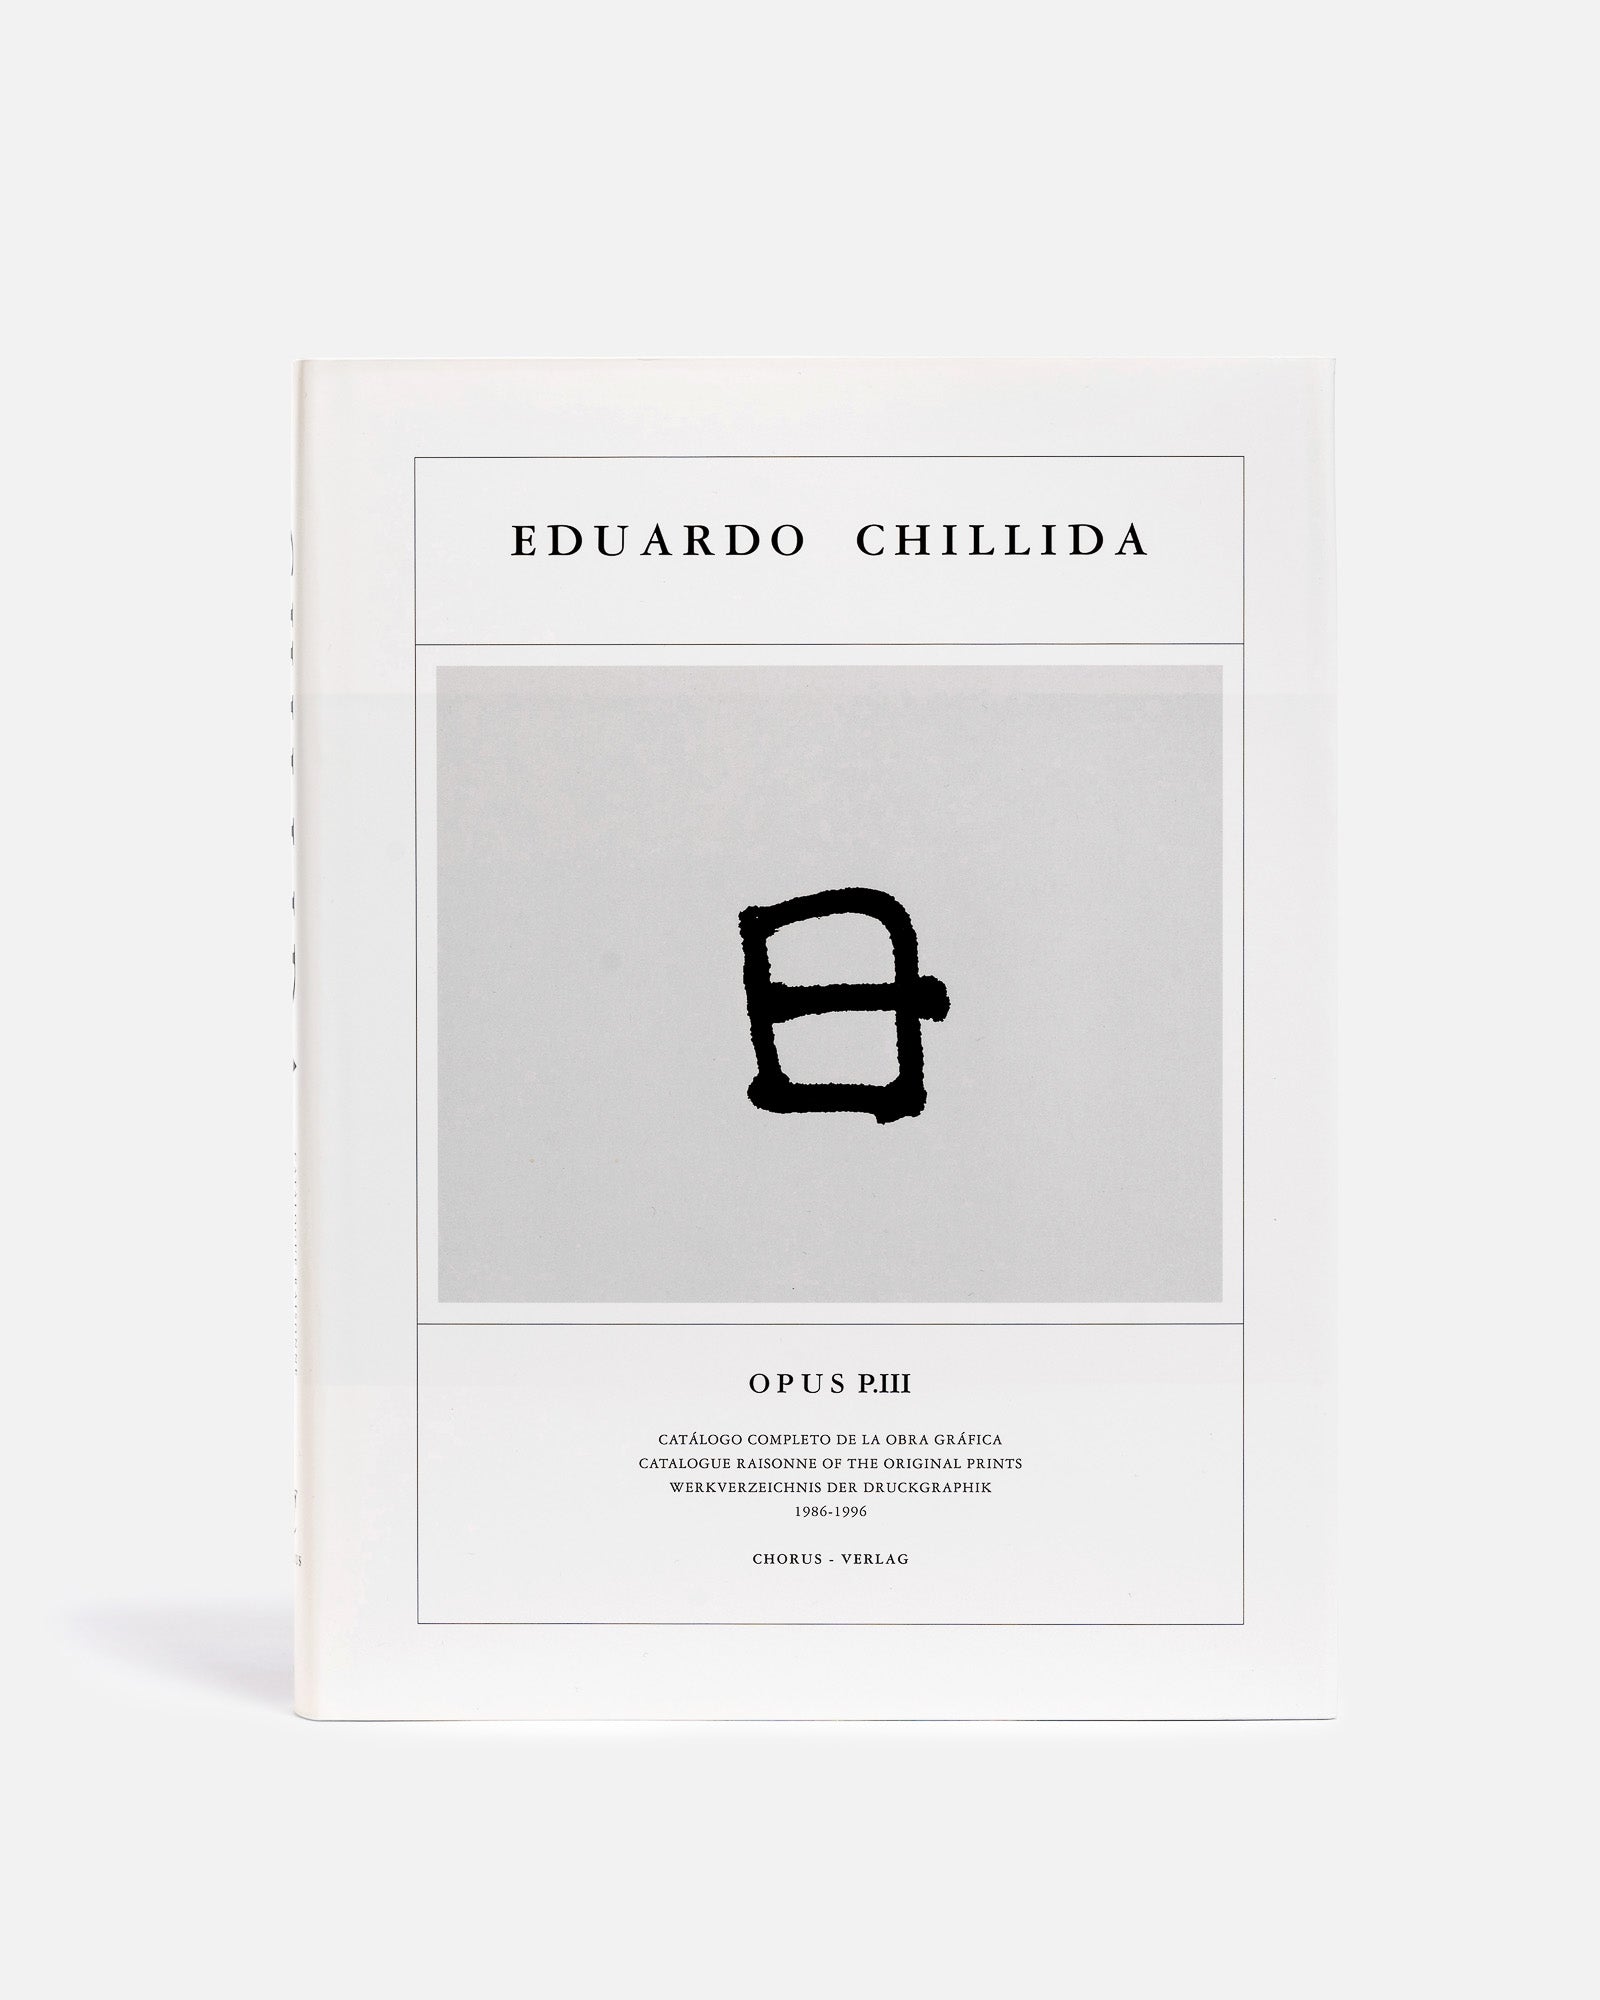 EDUARDO CHILLIDA OPUS III 1986 - 1996